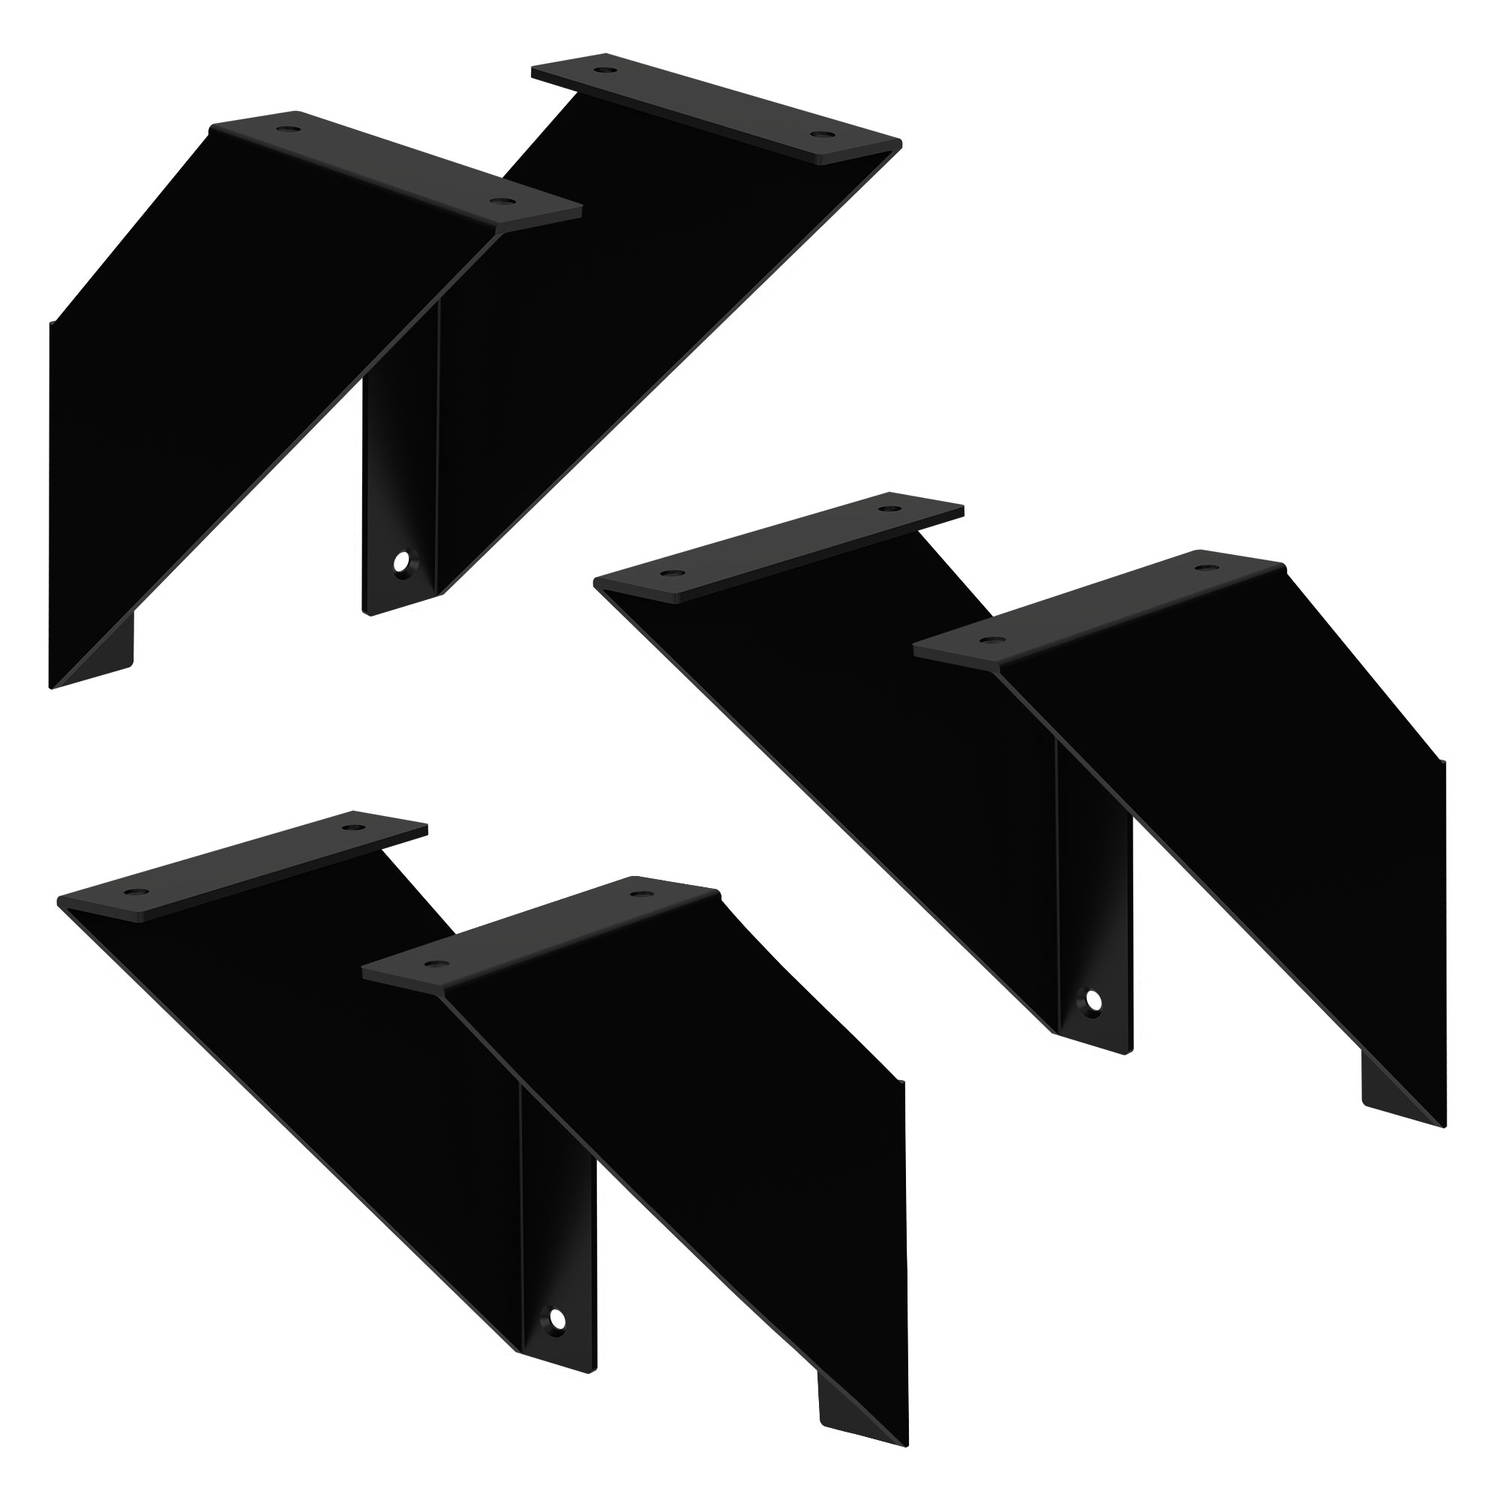 ML-Design 6 stuks plankbeugel 20 cm, zwart, metaal, driehoekige plankbeugels, zwevende plankbeugels, wandbevestiging, 90° wandbeugel, planksteun wandplank wandbeugel hangplank plan